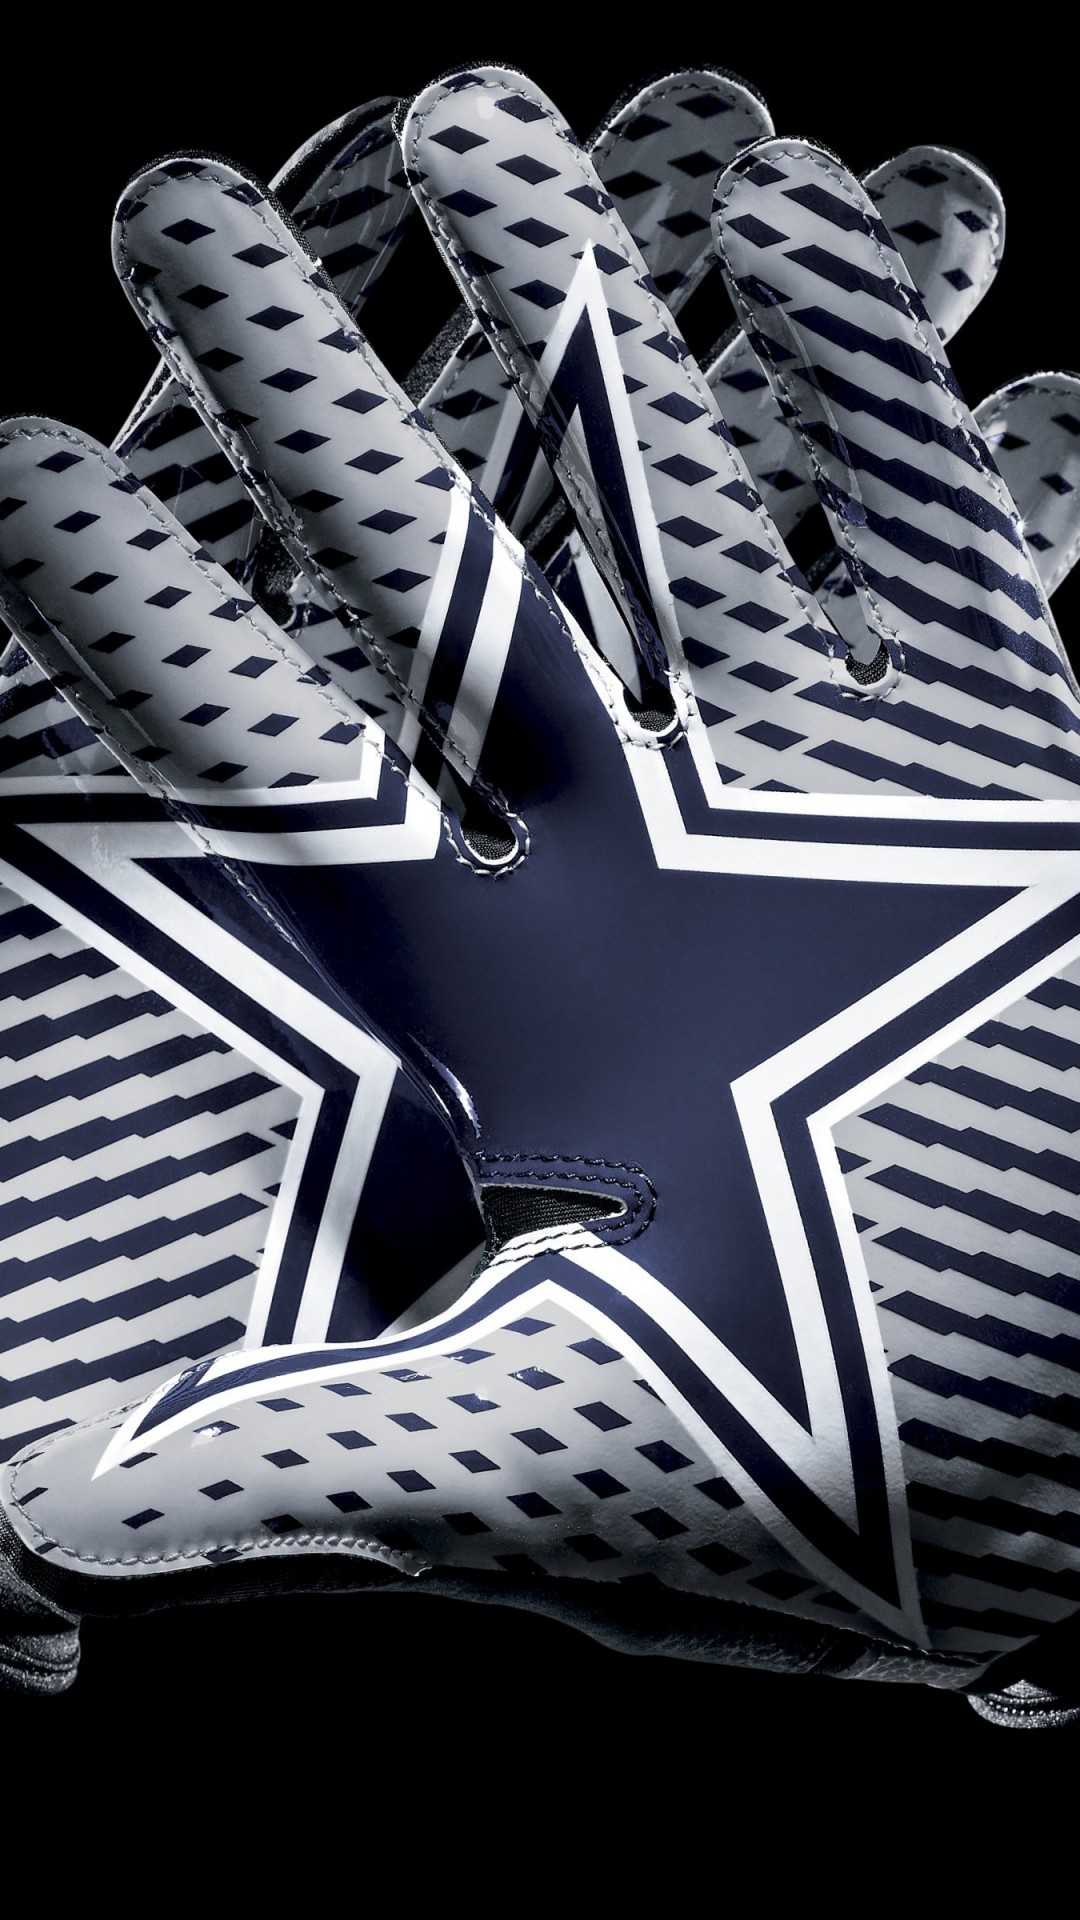 Dallas Cowboys Gloves Wallpaper for LG G2